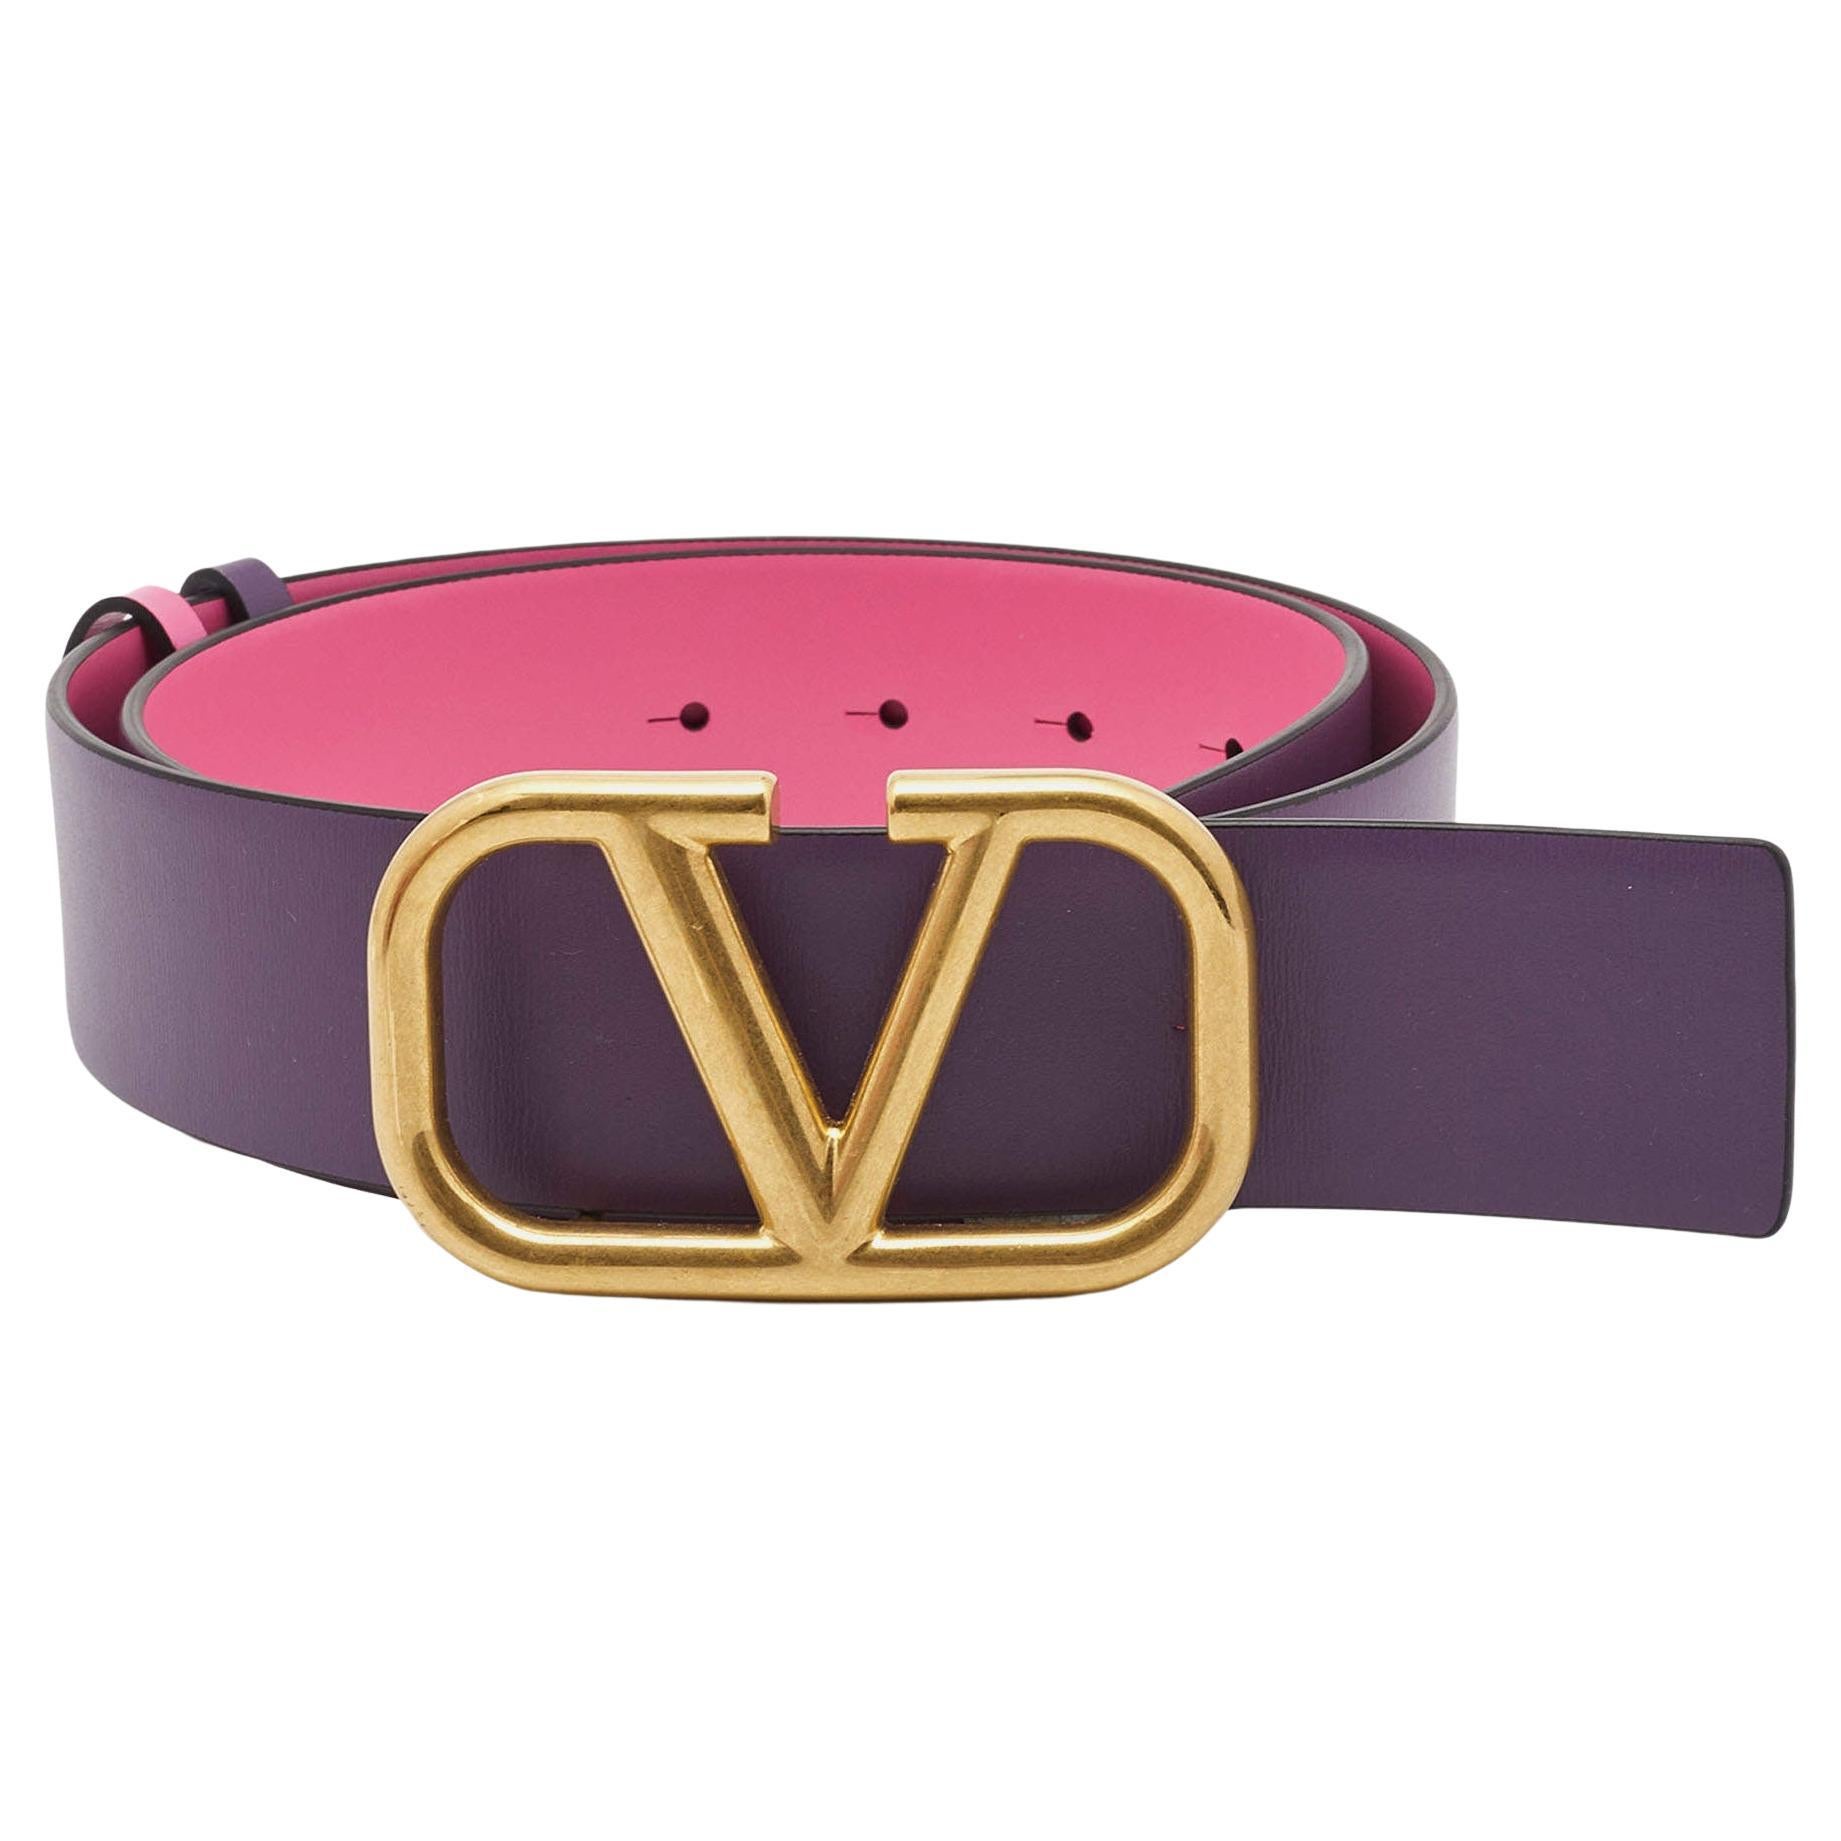 Valentino Pink/Purple Leather VLogo Reversible Belt 80CM